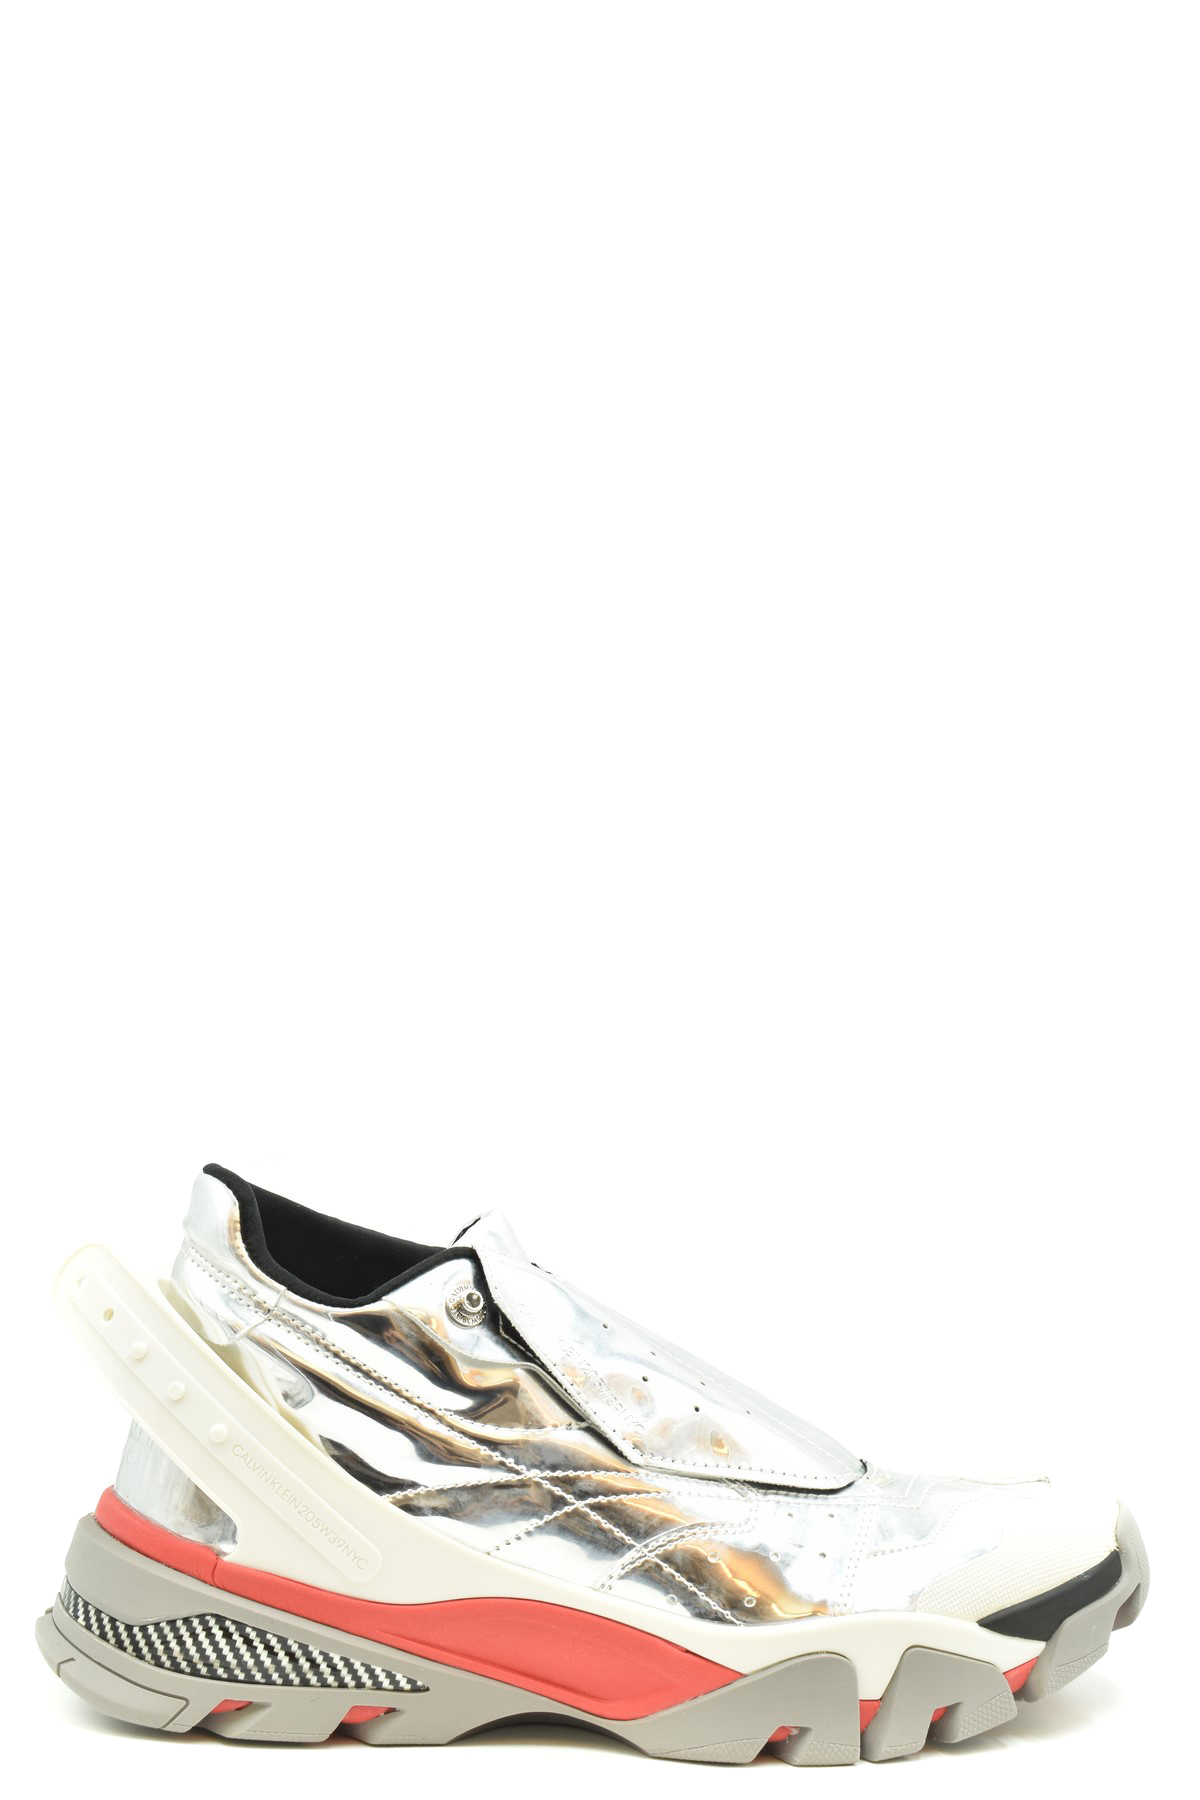 Calvin Klein 205W39nyc Sneakers | luxlet.com